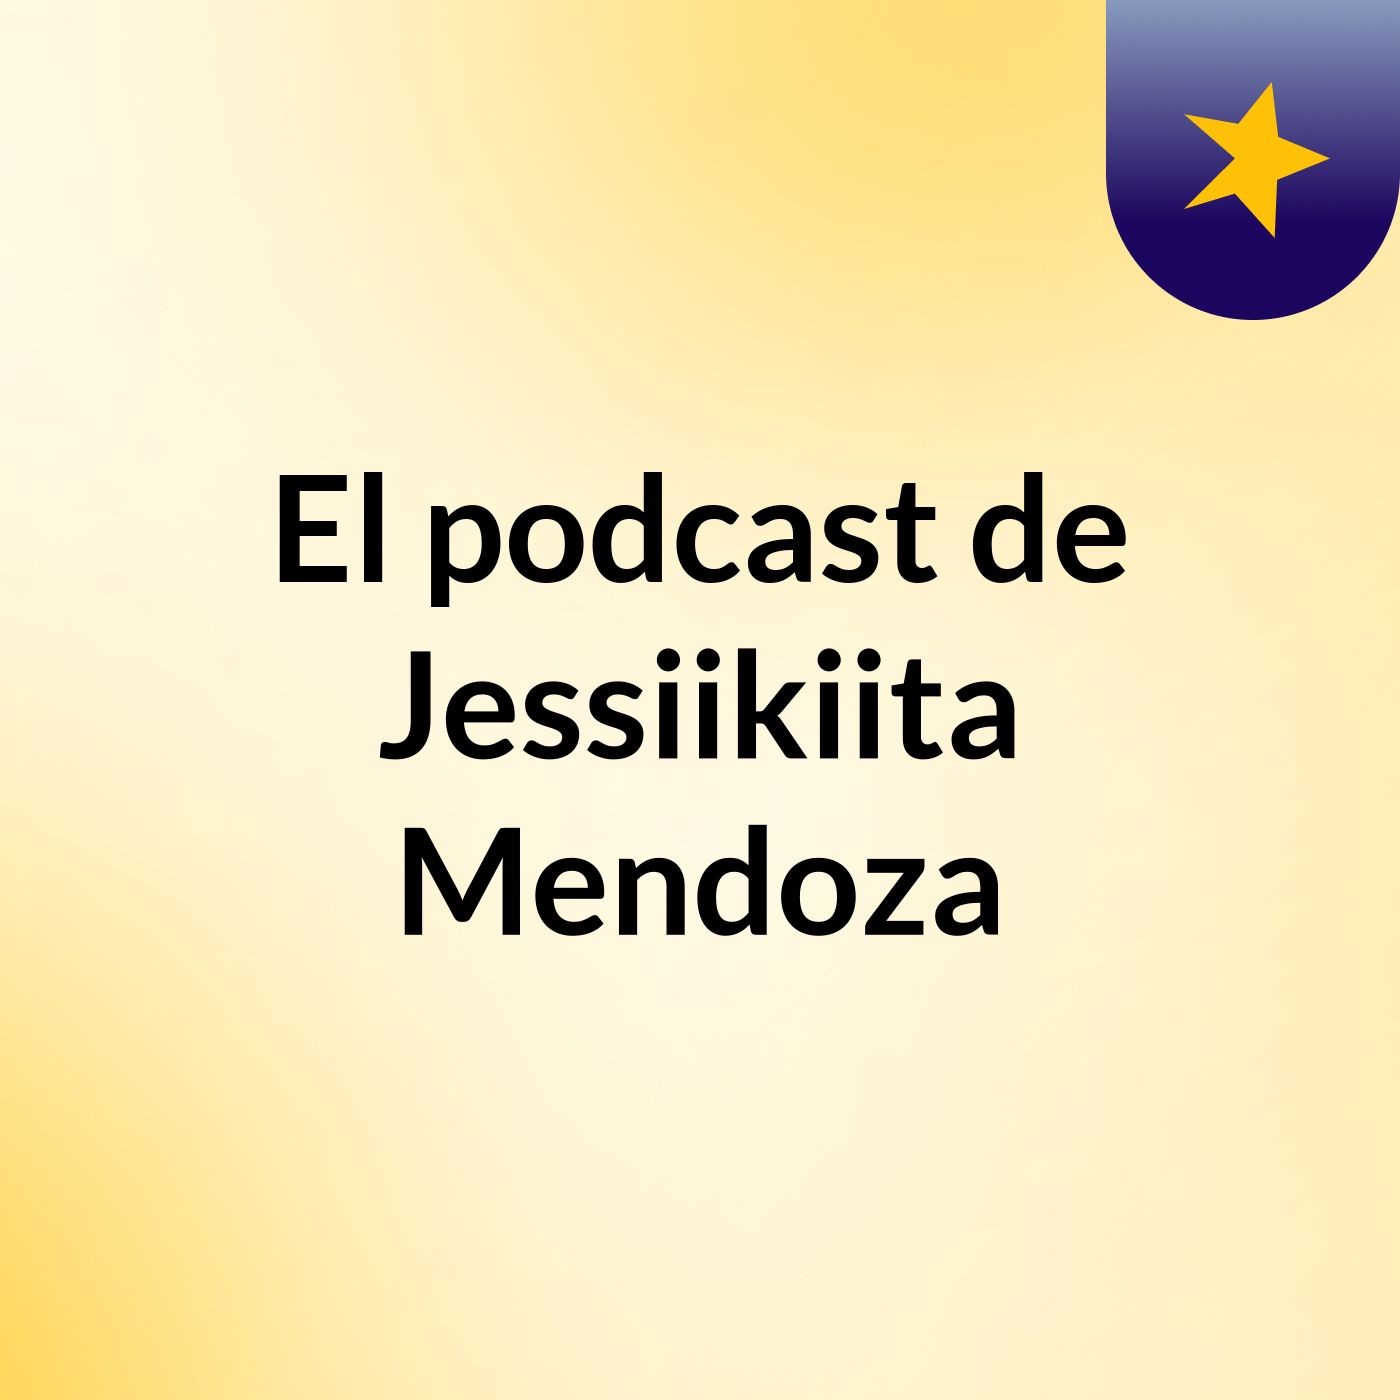 El podcast de Jessiikiita Mendoza